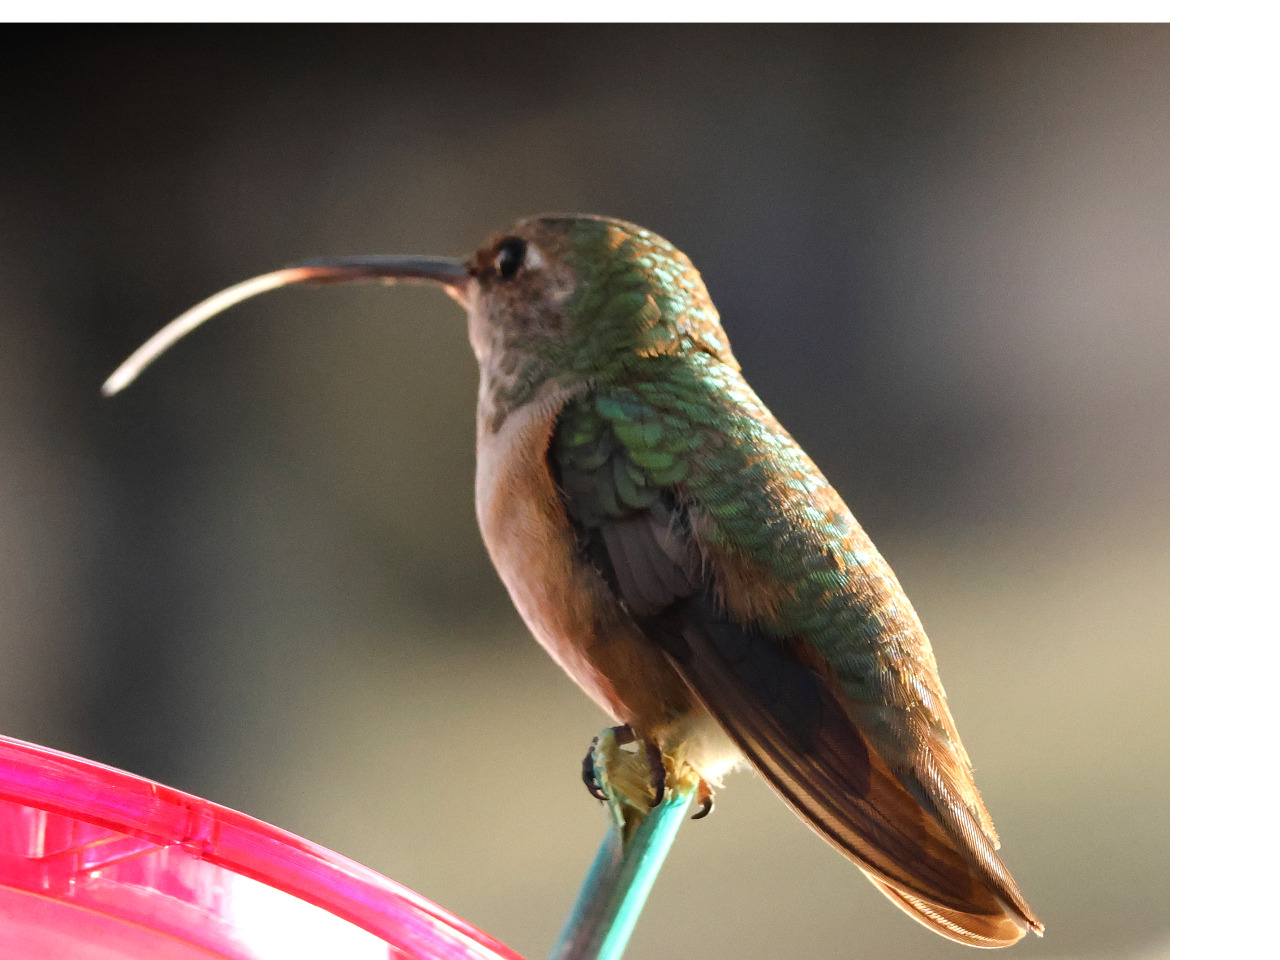 Columbus the Hummingbird at feeder ready to eat